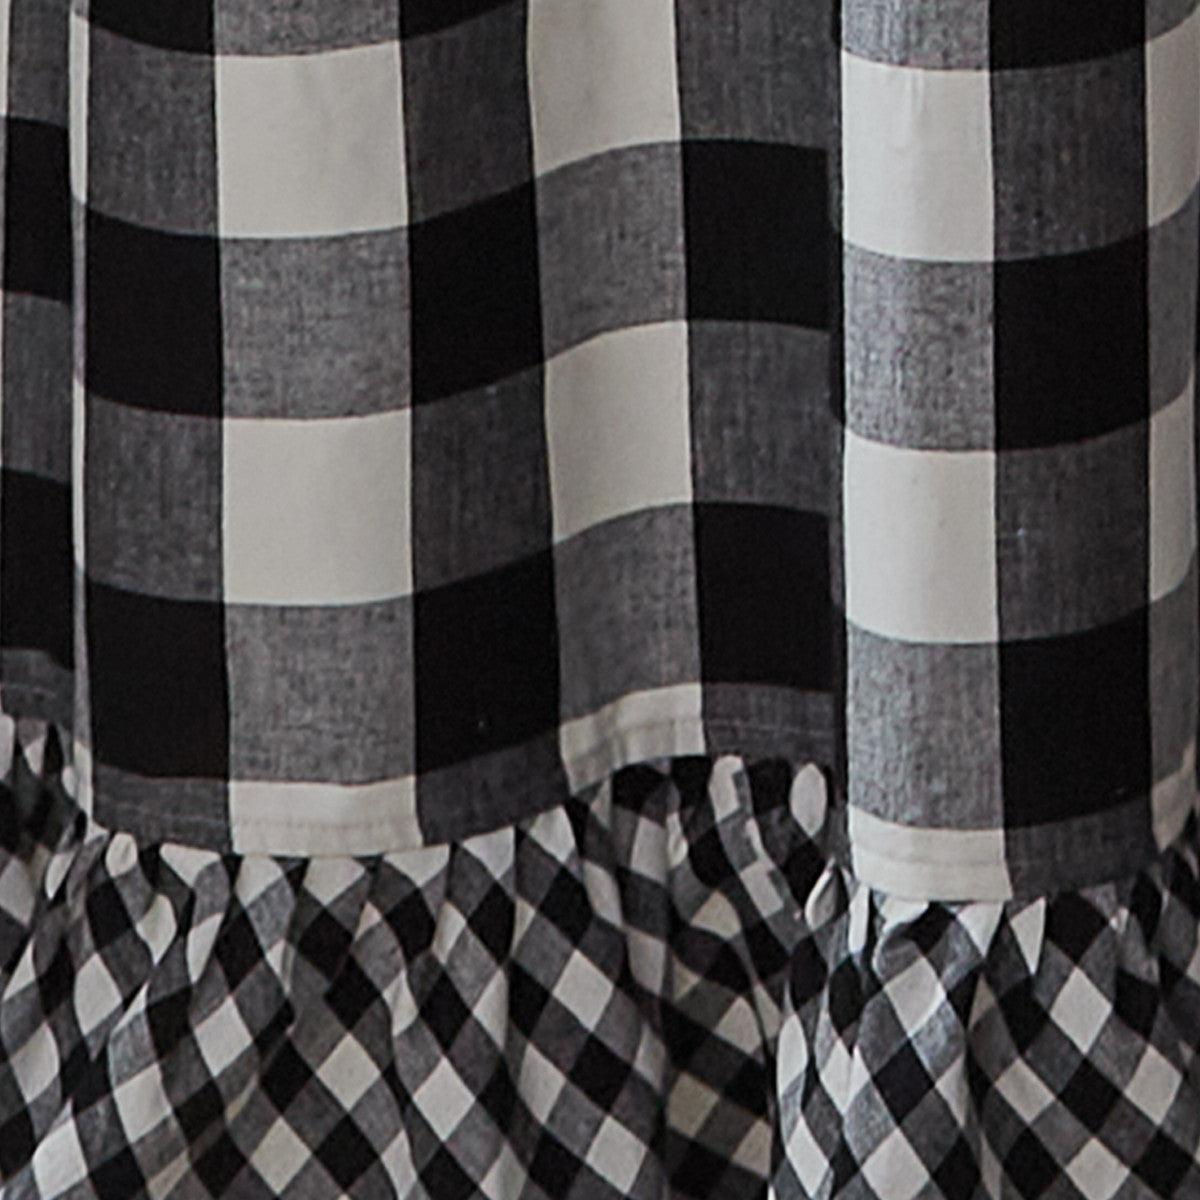 Wicklow Ruffled Shower Curtain - Black & Cream Park Designs - The Fox Decor